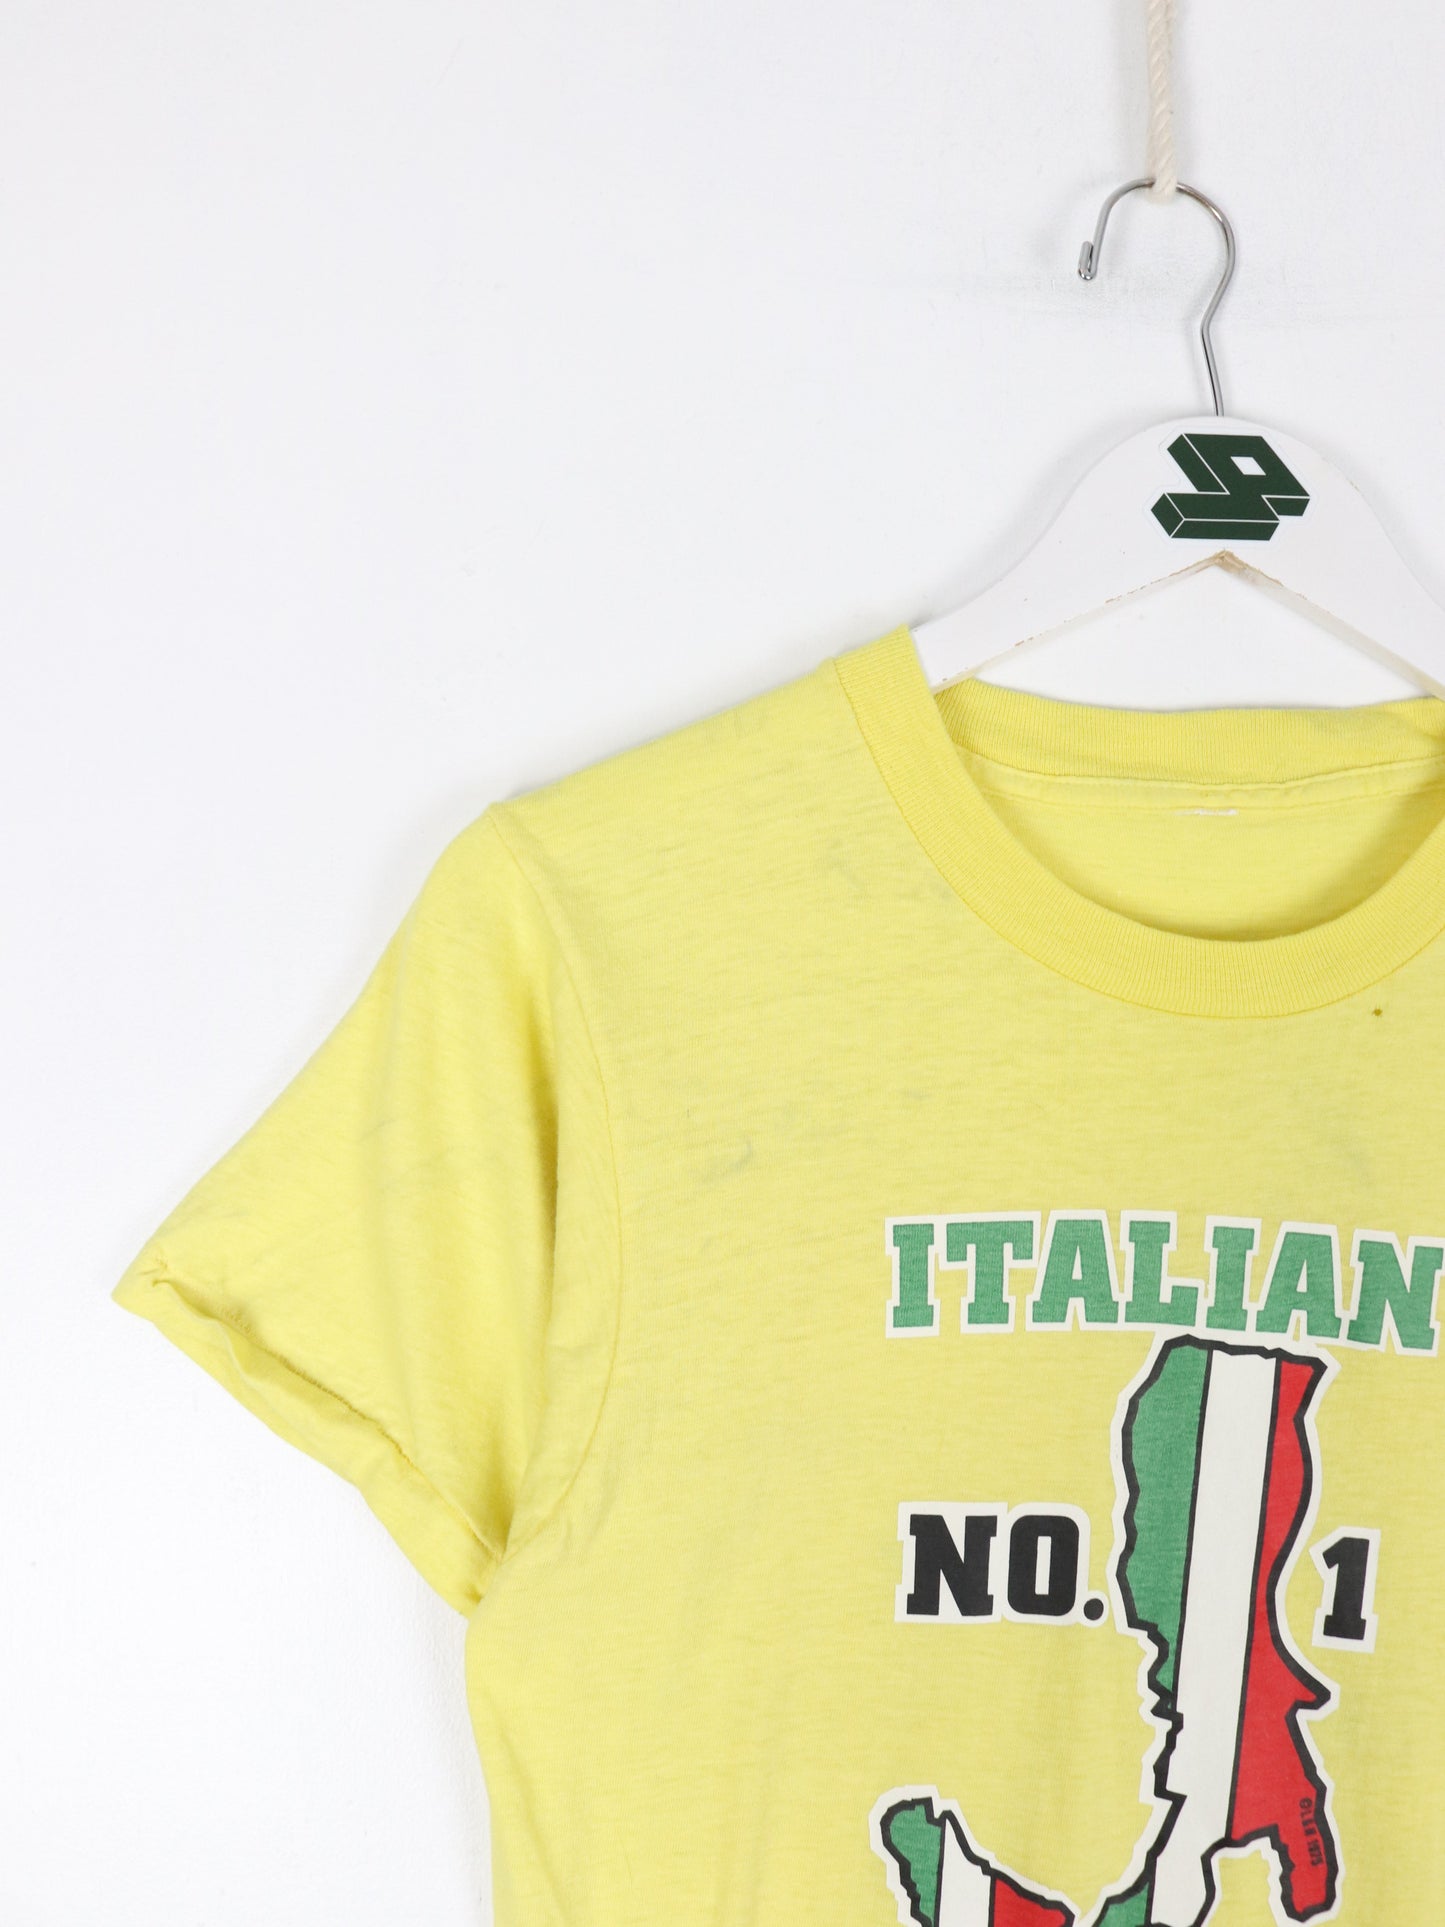 Vintage Italian American T Shirt Mens XS Yellow 80s